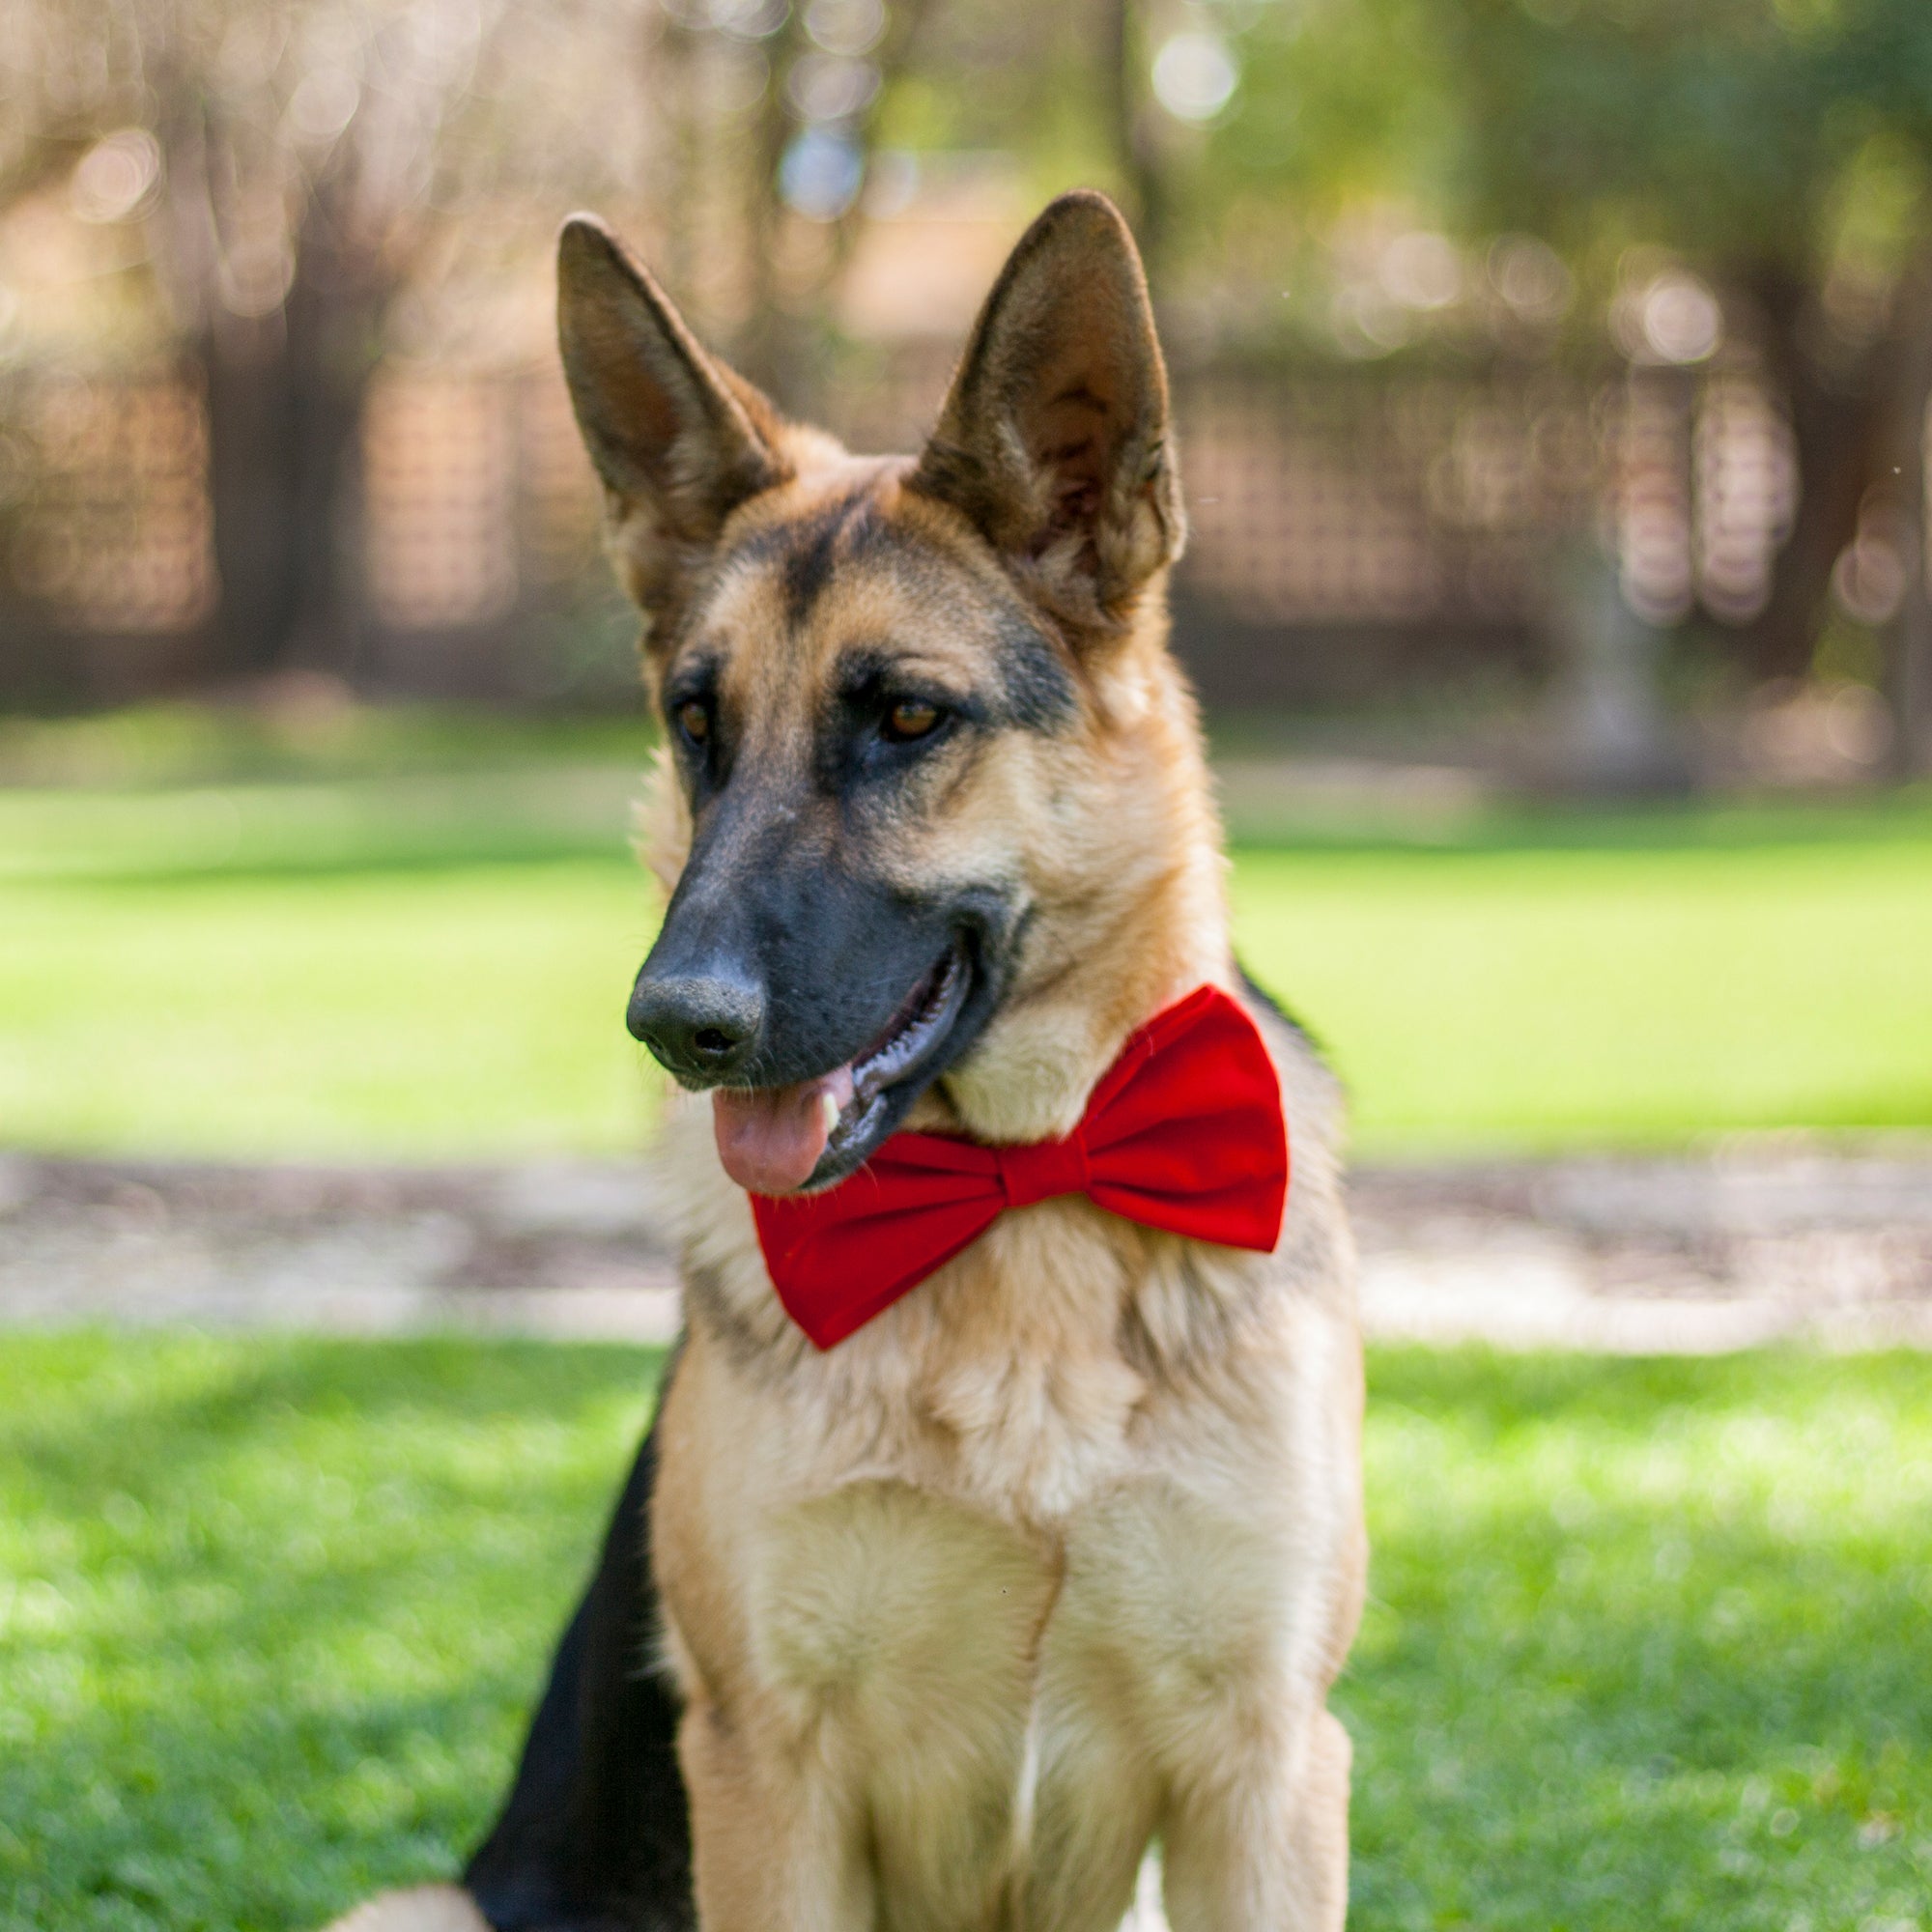 Collar de Corbata de Moño Negro para Perro de Jack Pet Style